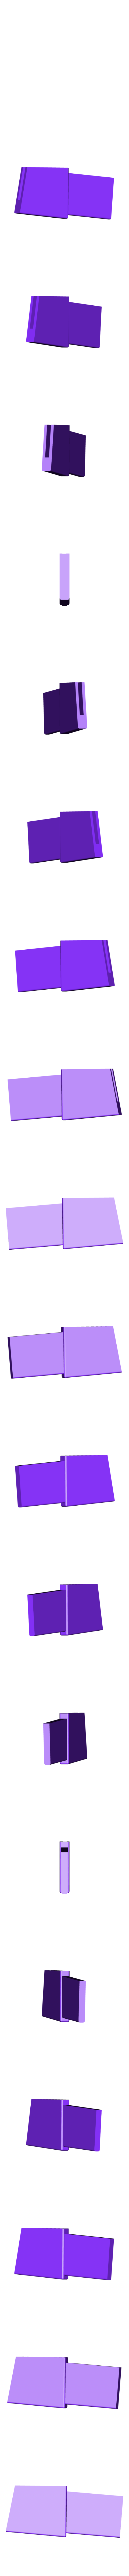 Left_Wing_Purple.stl Download free STL file Buzz Lightyear - Multi Color Print • 3D printer object, ChaosCoreTech